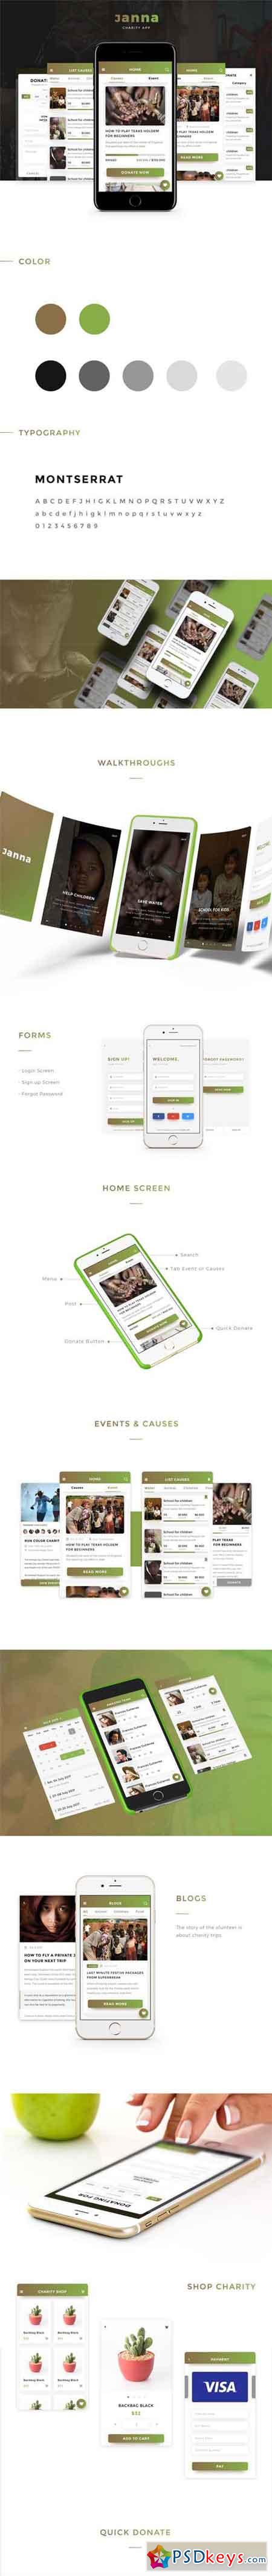 Janna Charity Mobile UI Kit